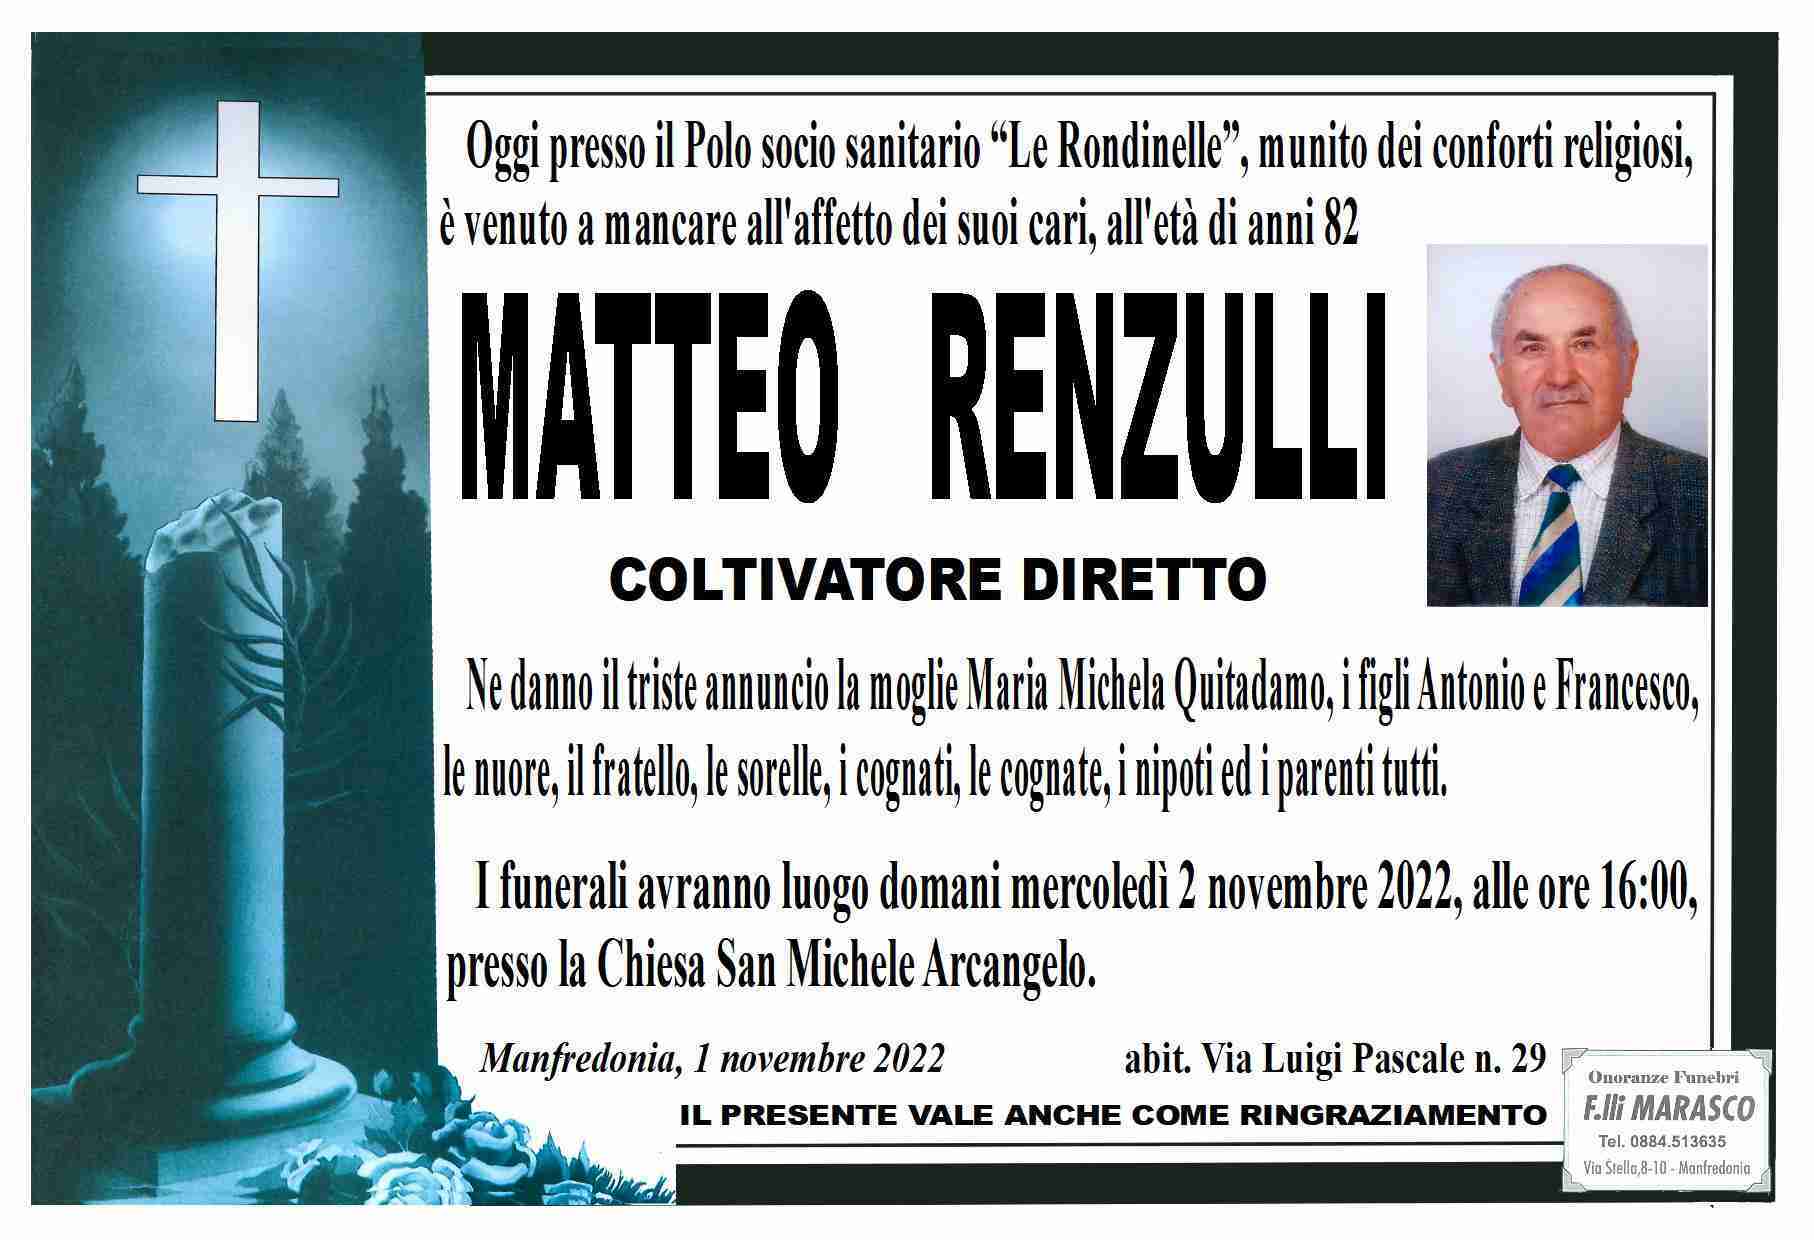 Matteo Renzulli